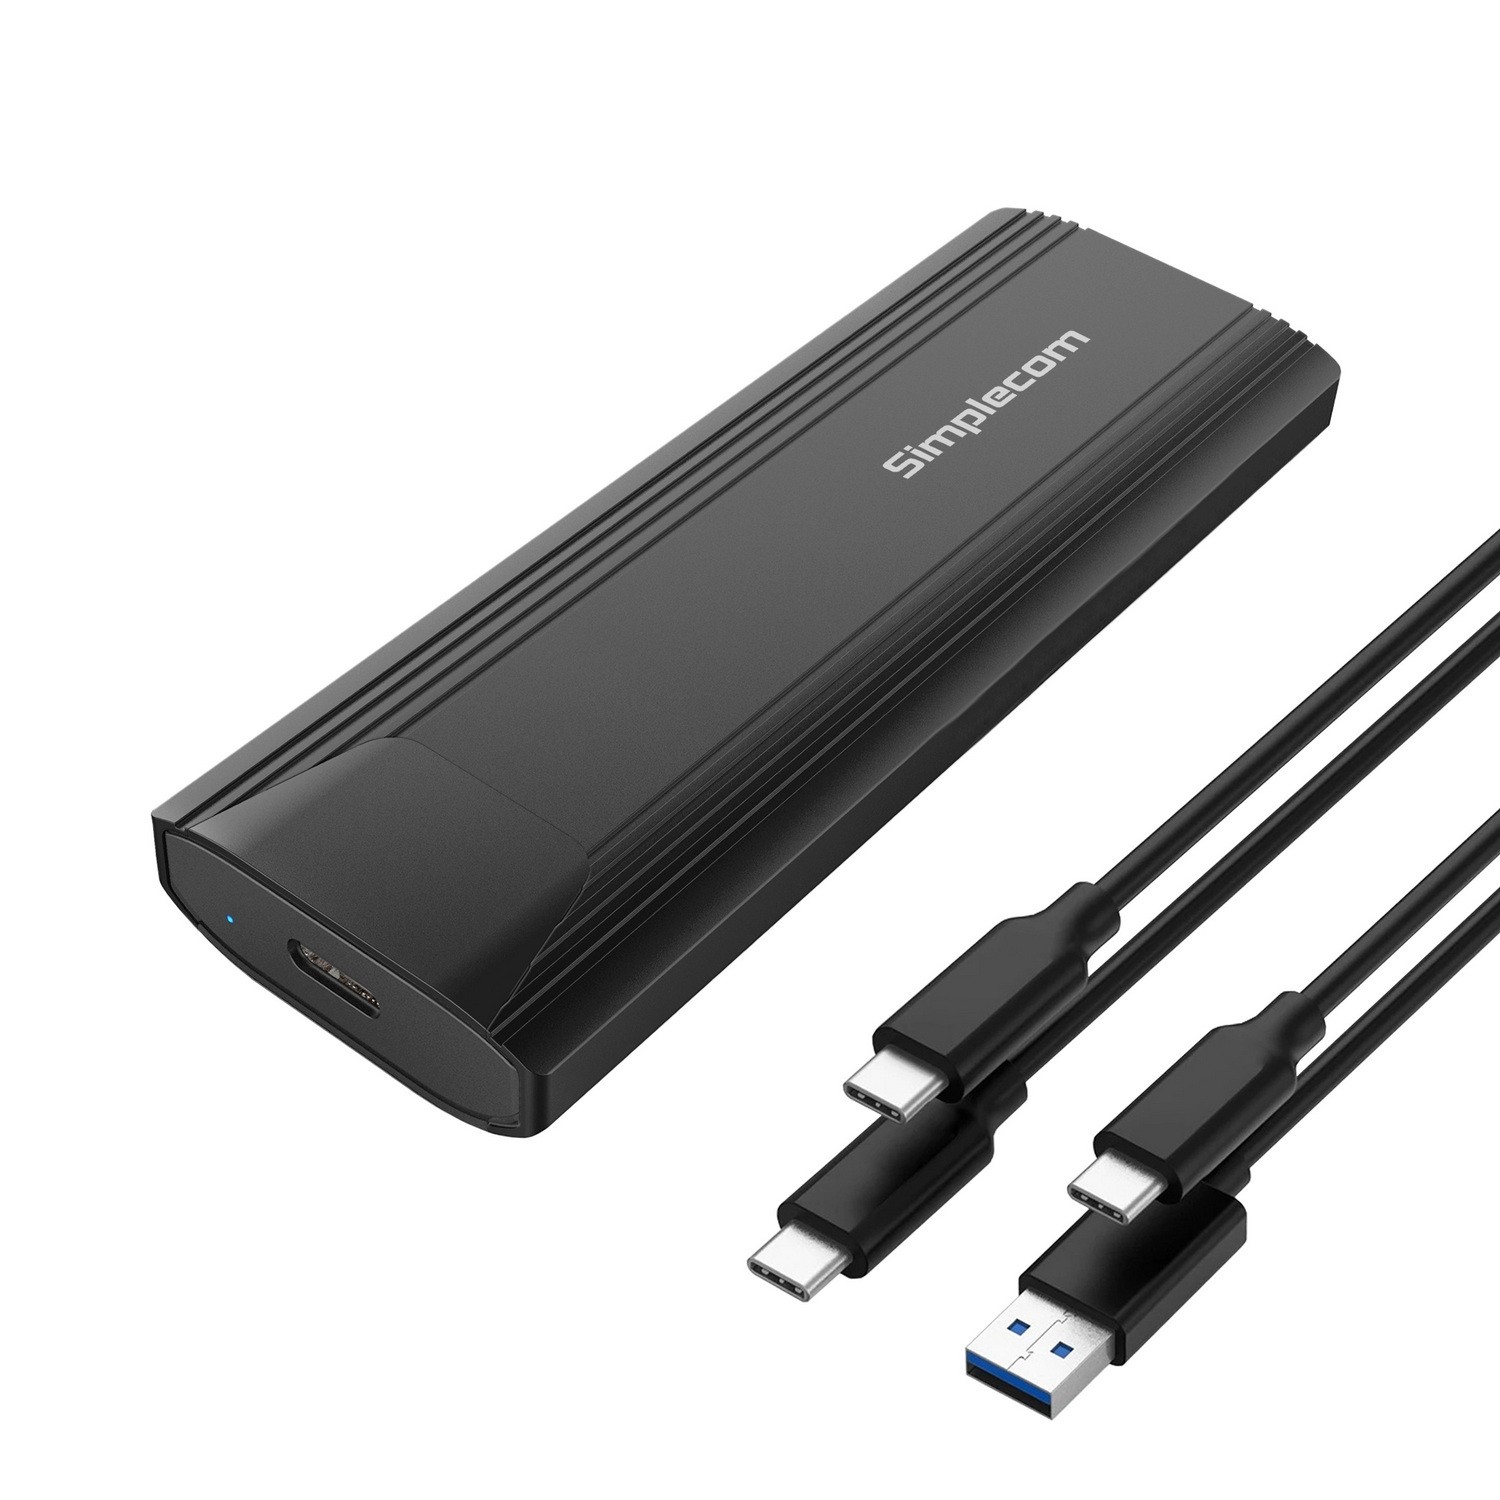 Simplecom SE504v2 NVMe SATA Dual Protocol M.2 SSD USBC Enclosure ToolFree USB 3.2 Gen 2 10Gbps